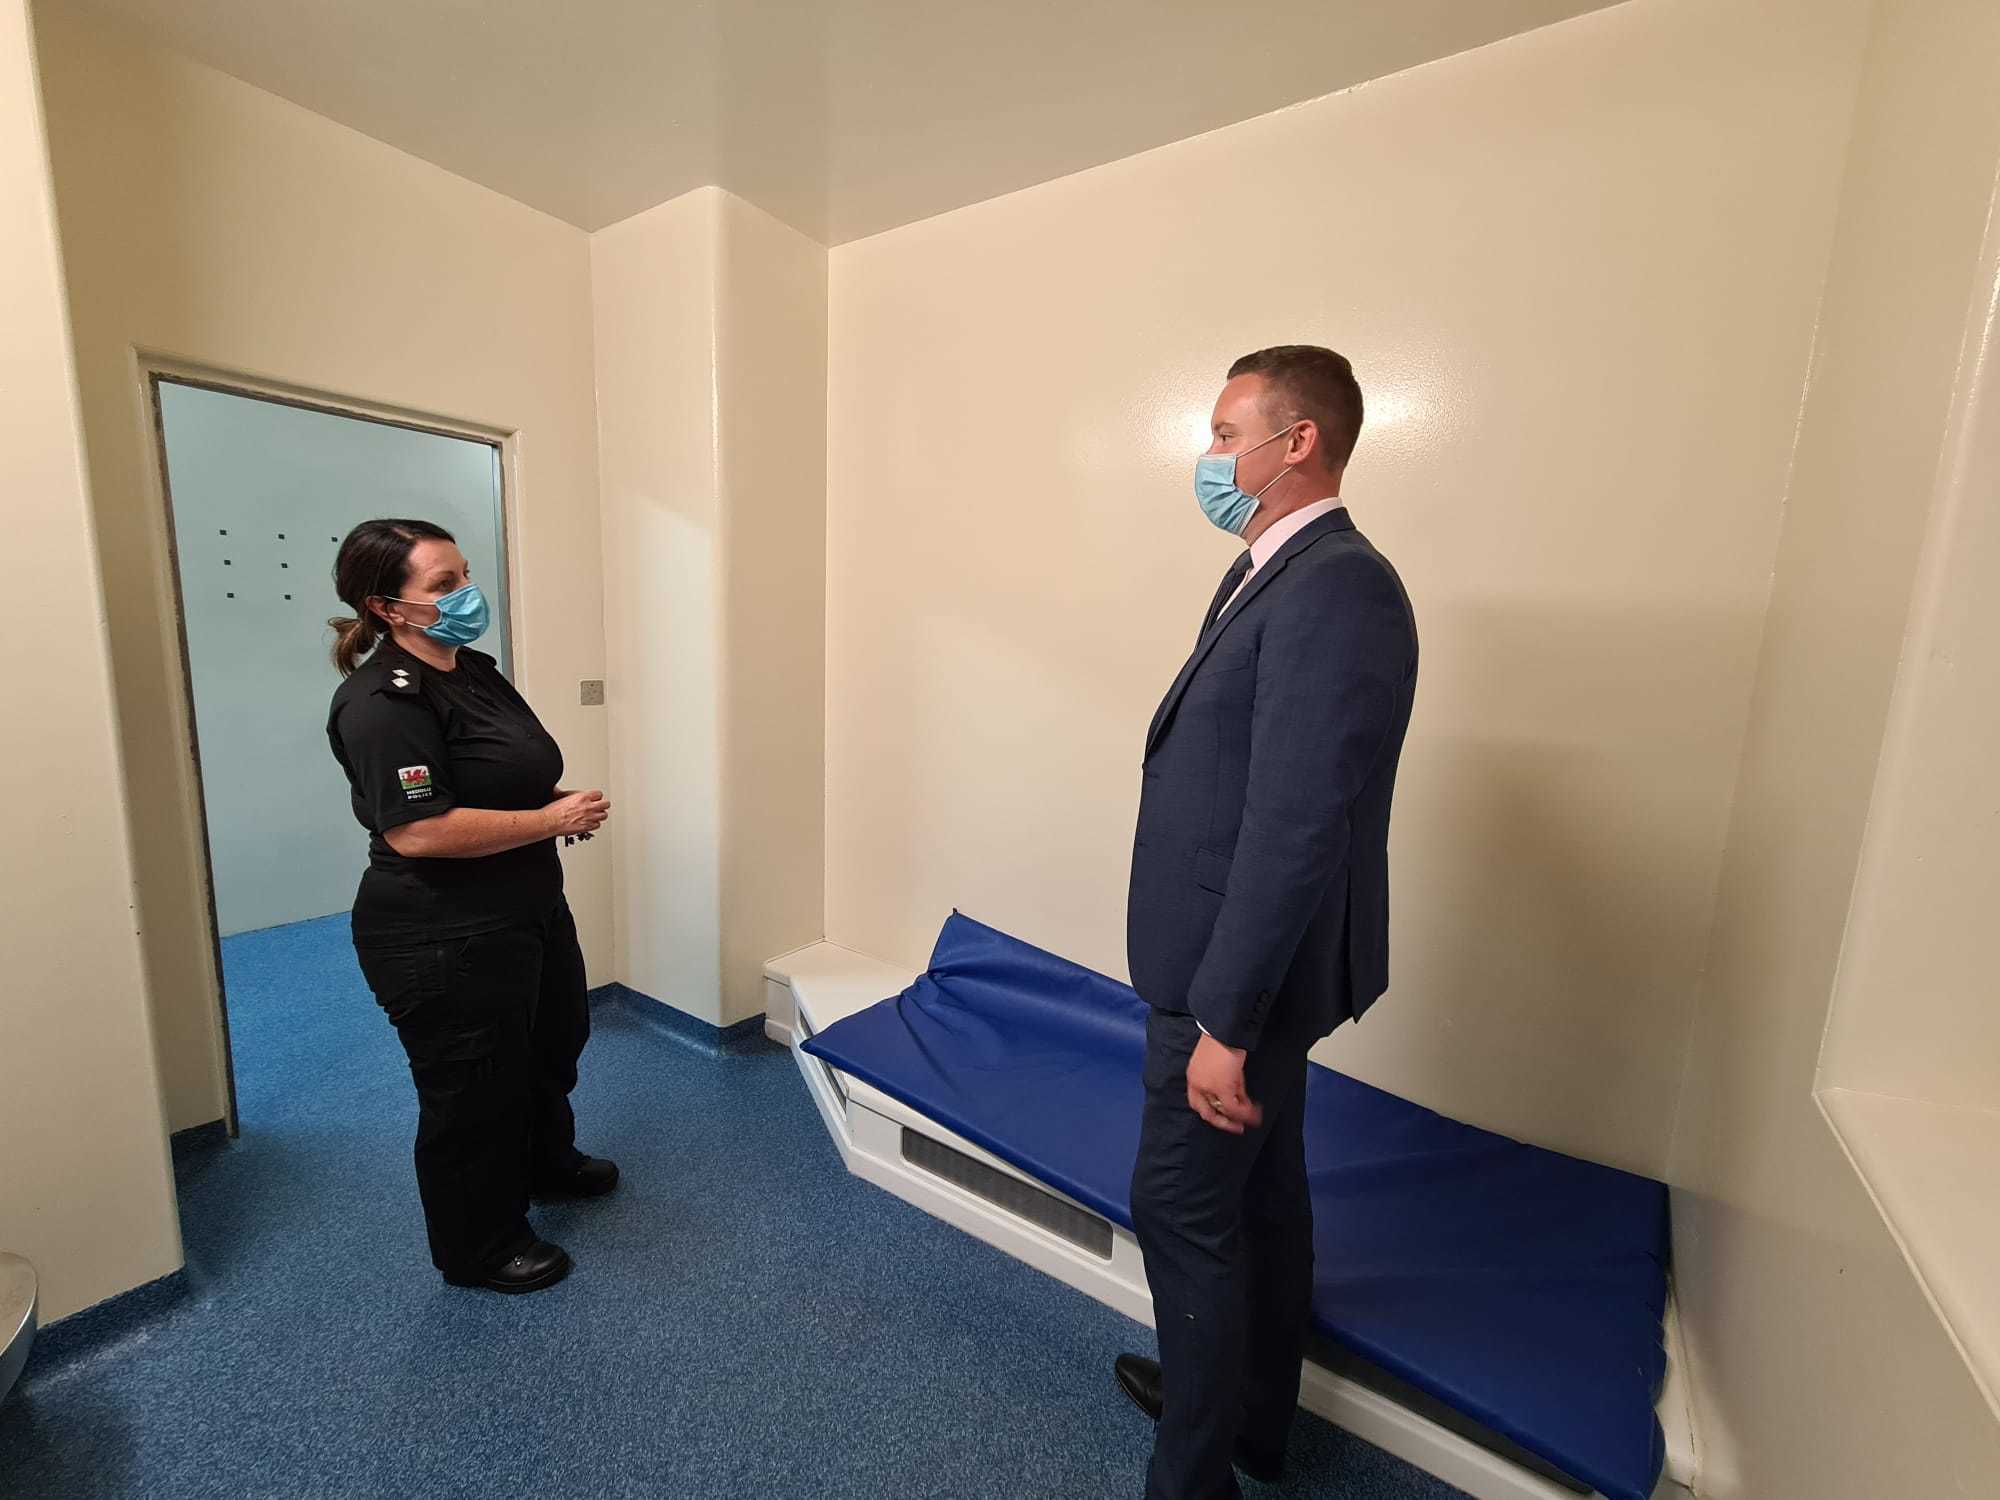 Gareth Davies MS with Custody Inspector Debra Ratcliffe in the St Asaph NWP Custody Suite.